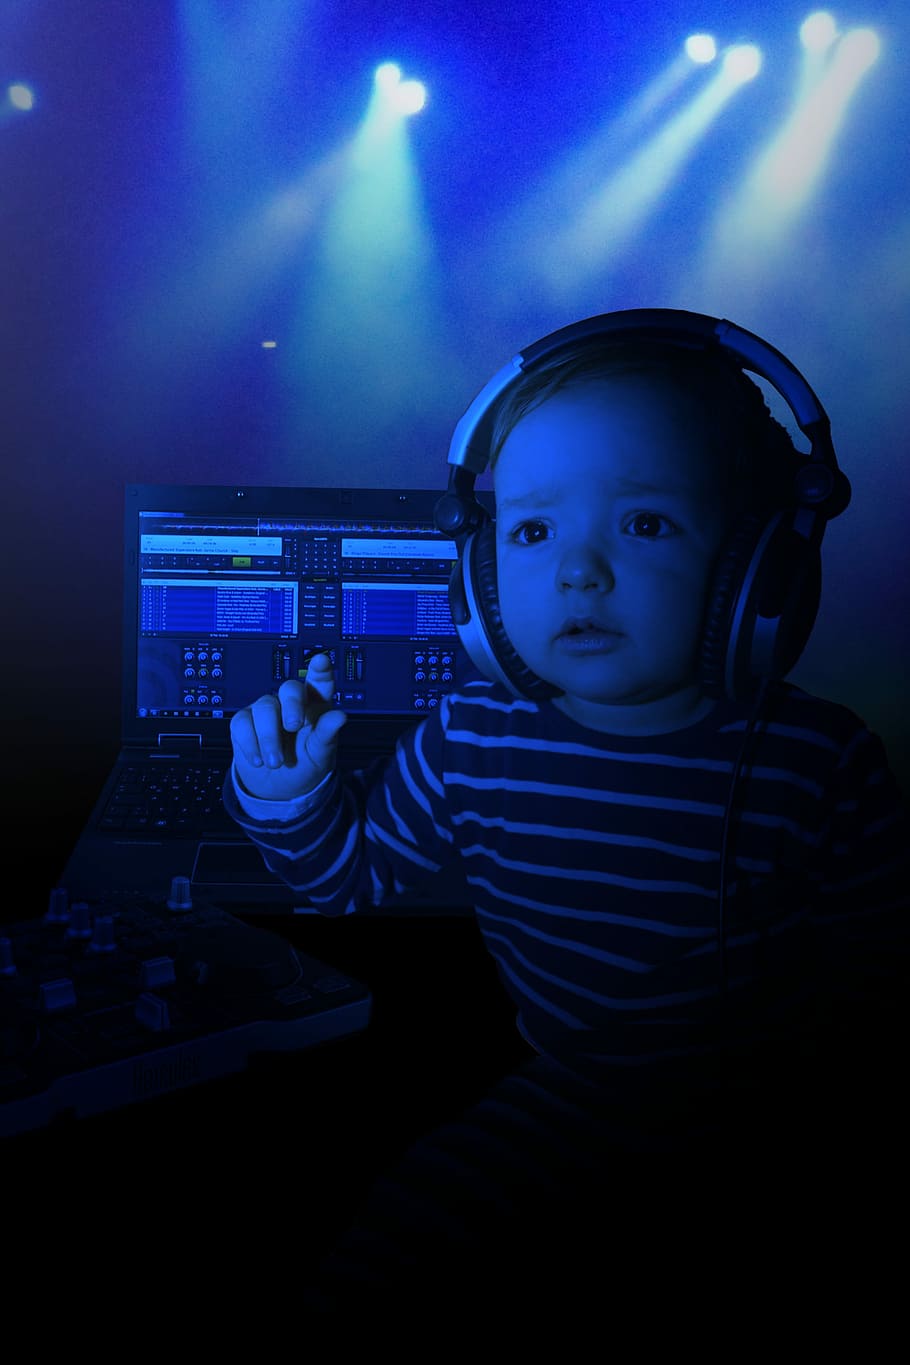 Child, Baby, Music, baby, music, listen, new year's eve, sound, headphones, audio, listen to music